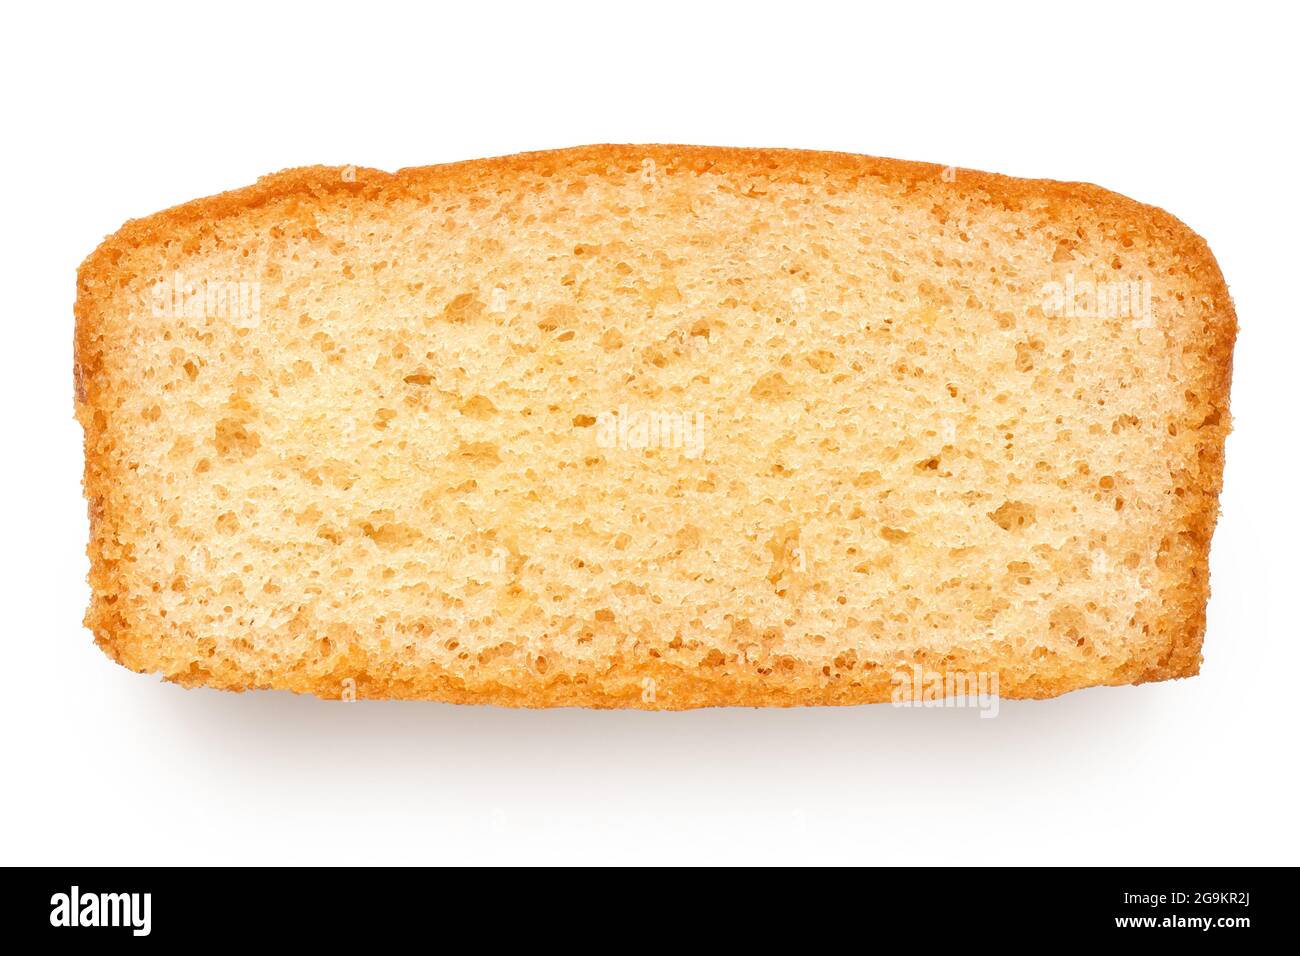 Slice of plain sponge cake isolated on white. Top view. Stock Photo